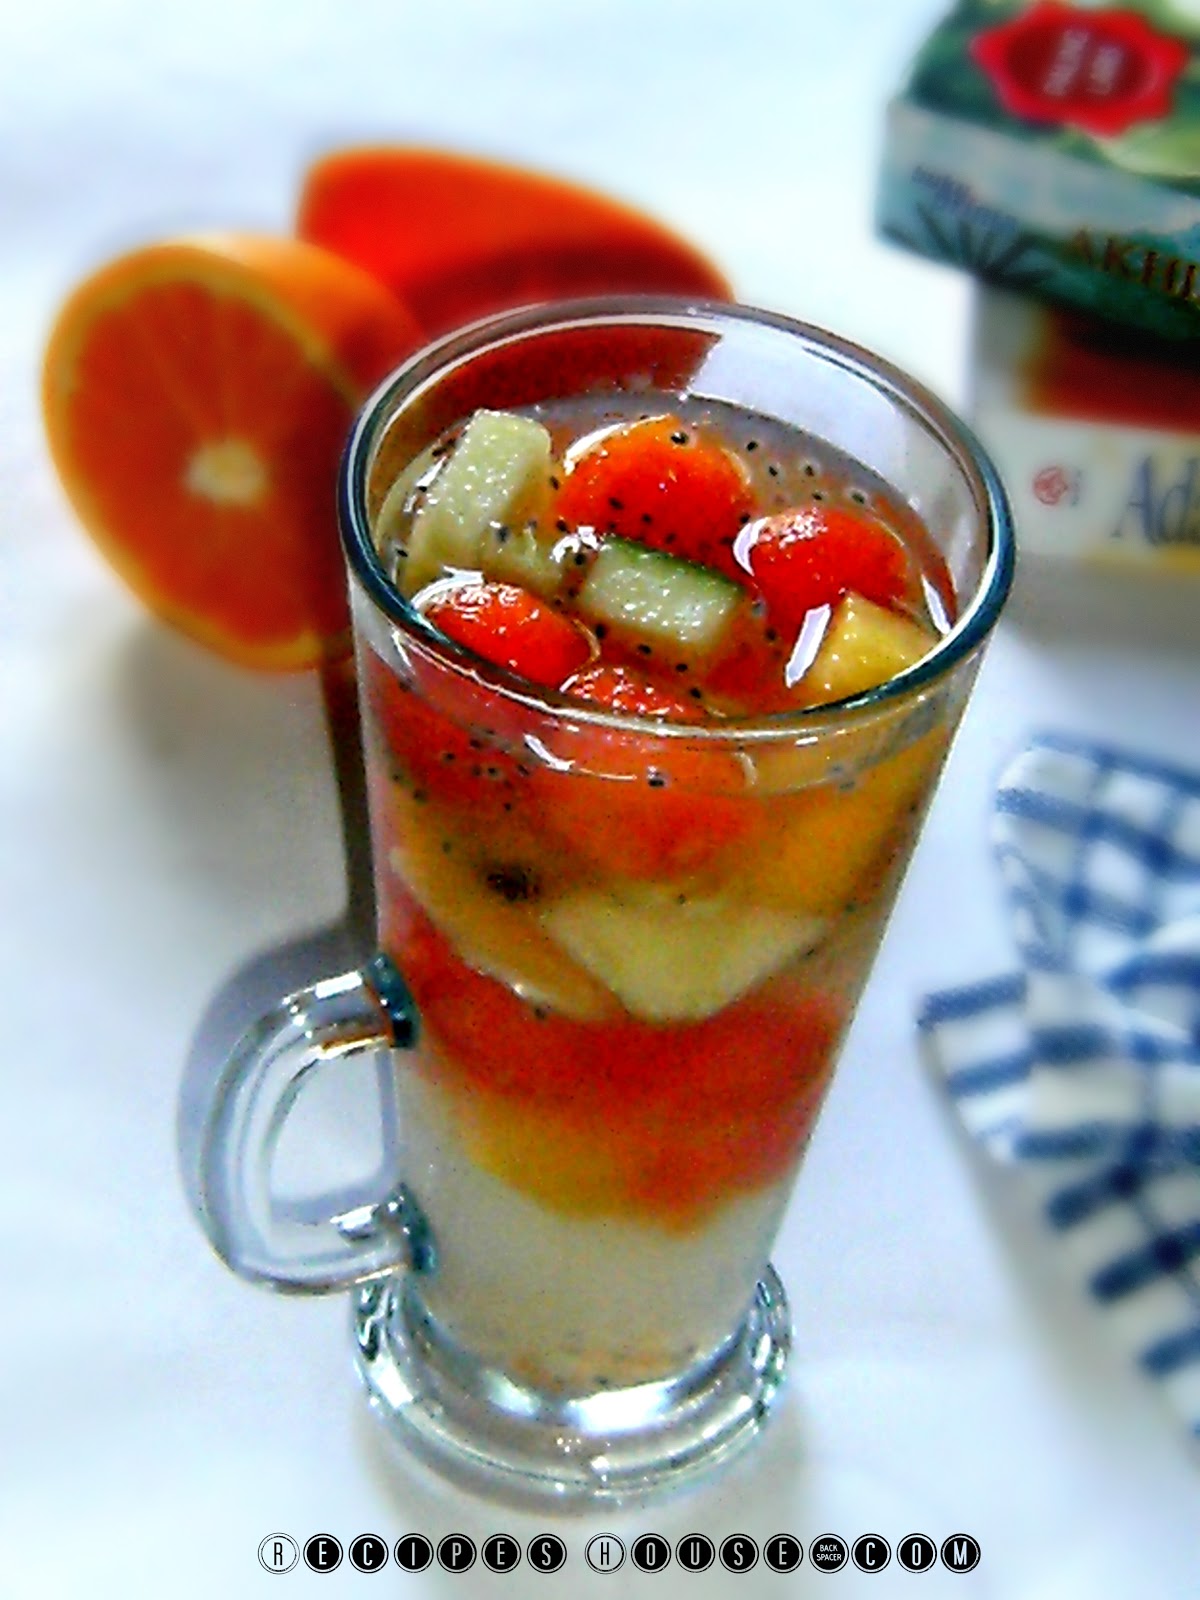 Julia Homemade: Homemade Fruit Cocktail